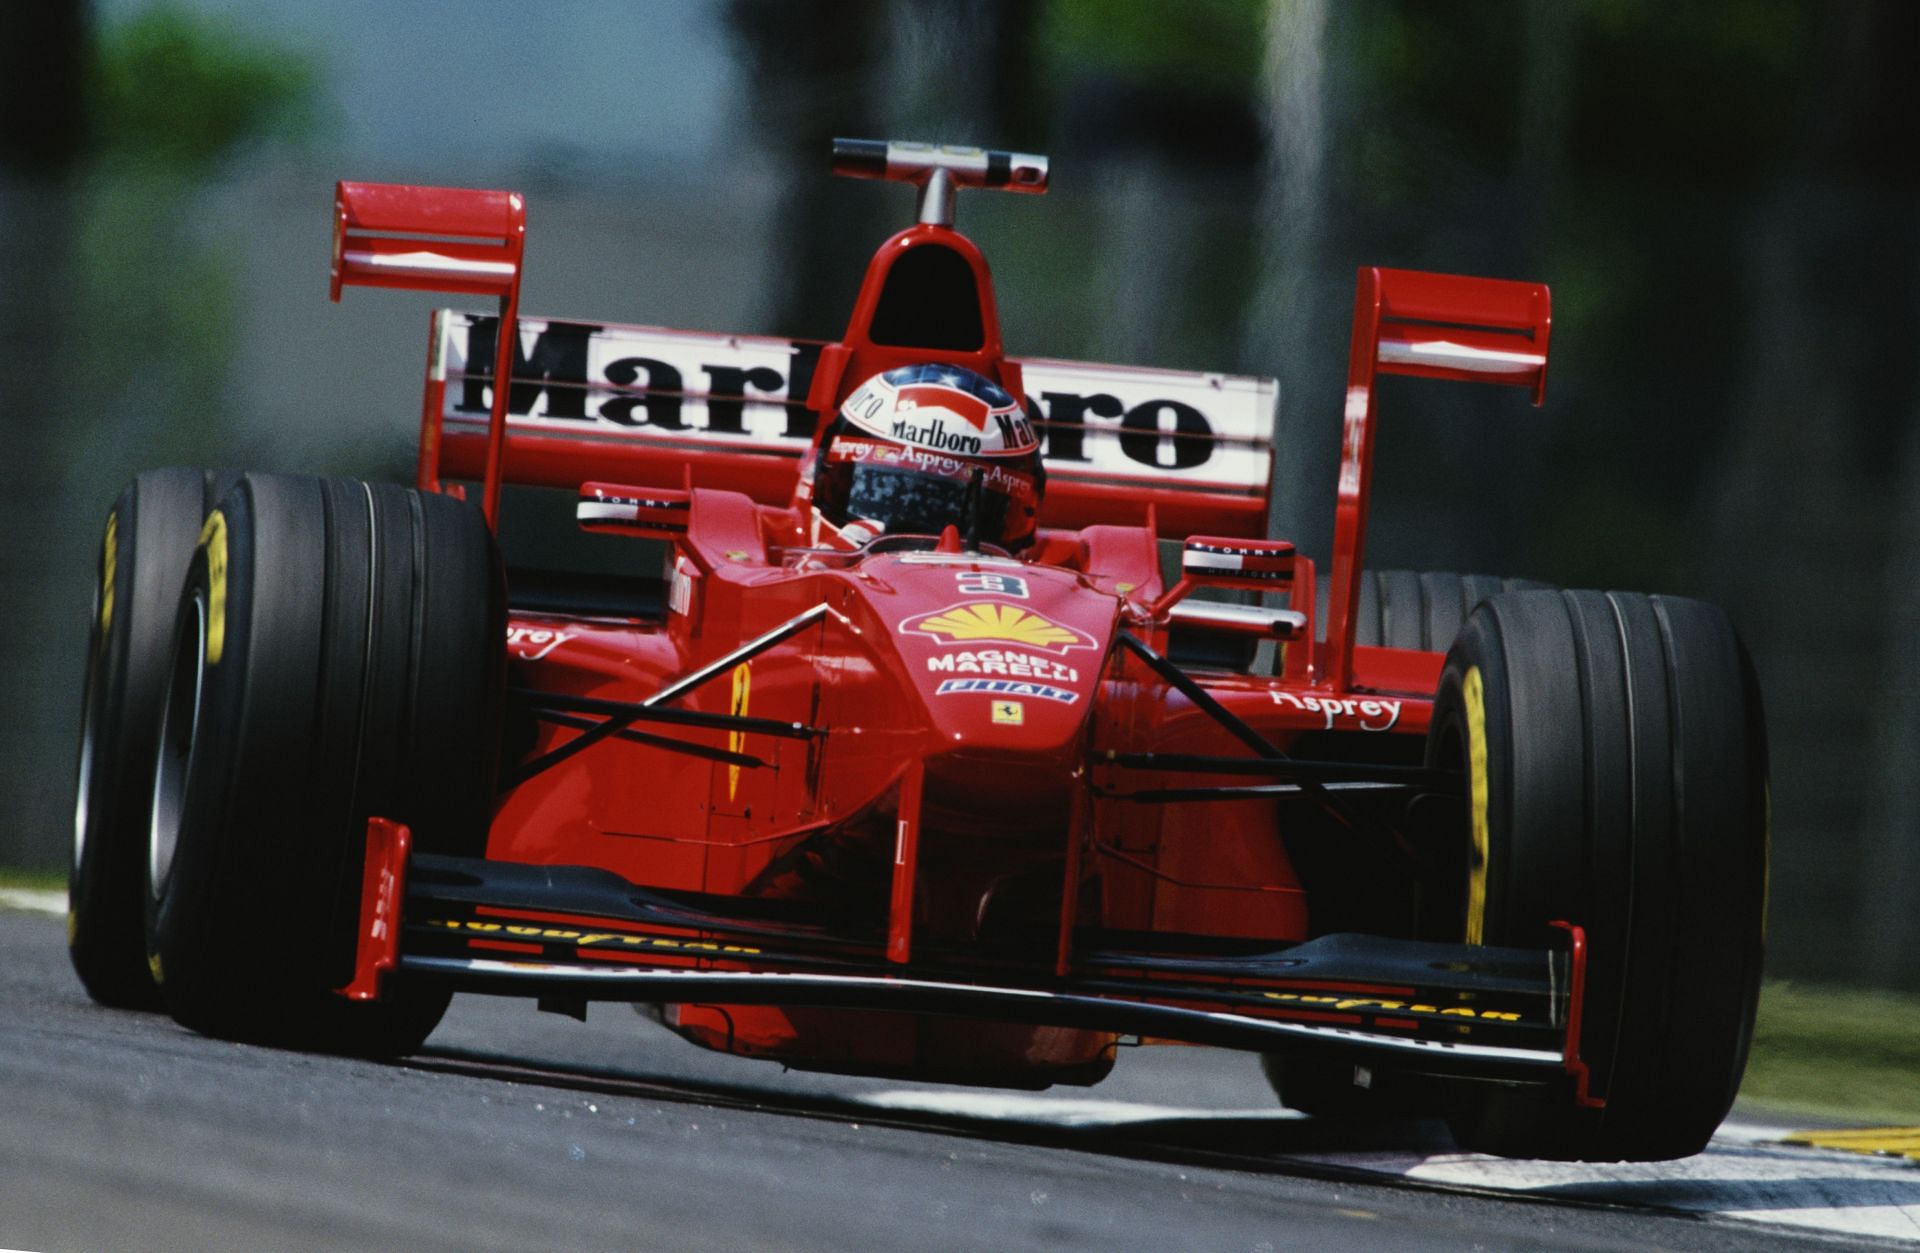 Grand Prix of San Marino - Michael Schumacher drives the Ferrari F300